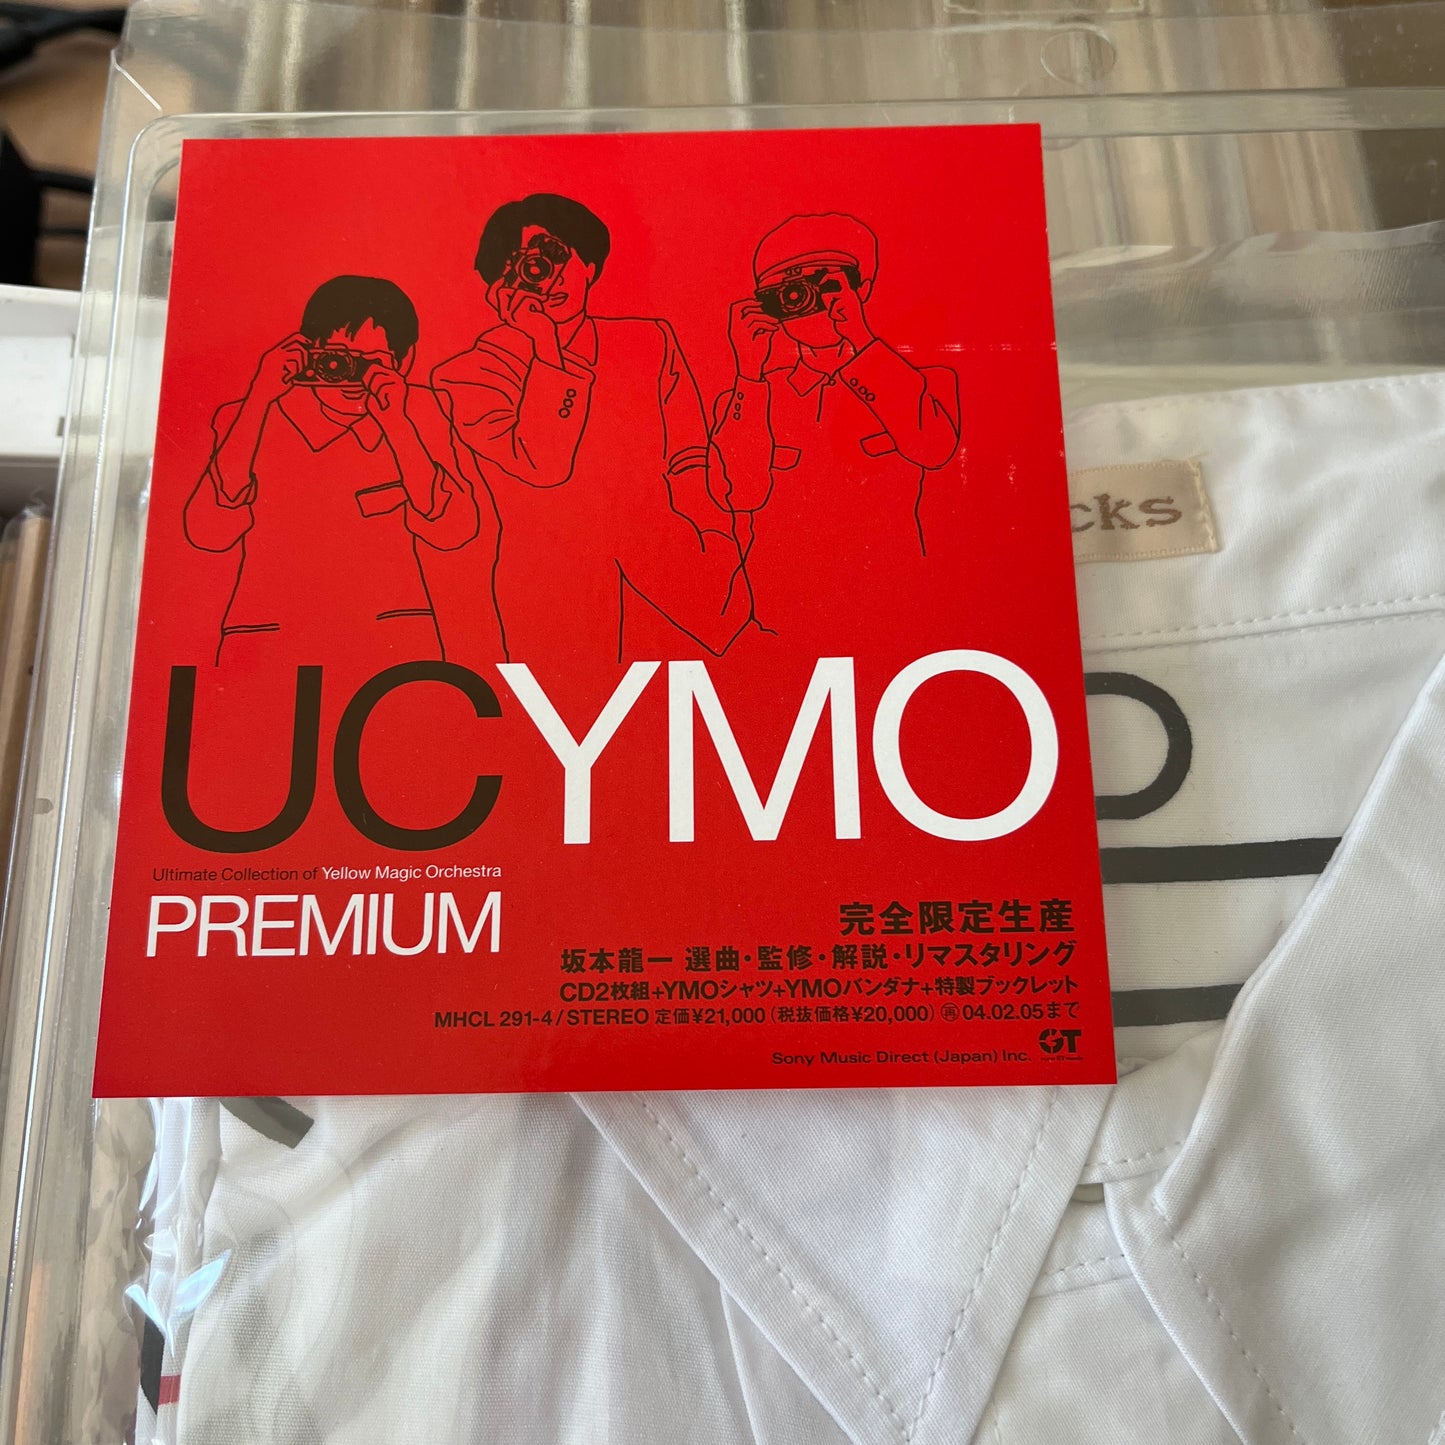 UC YMO PREMIUM - 邦楽